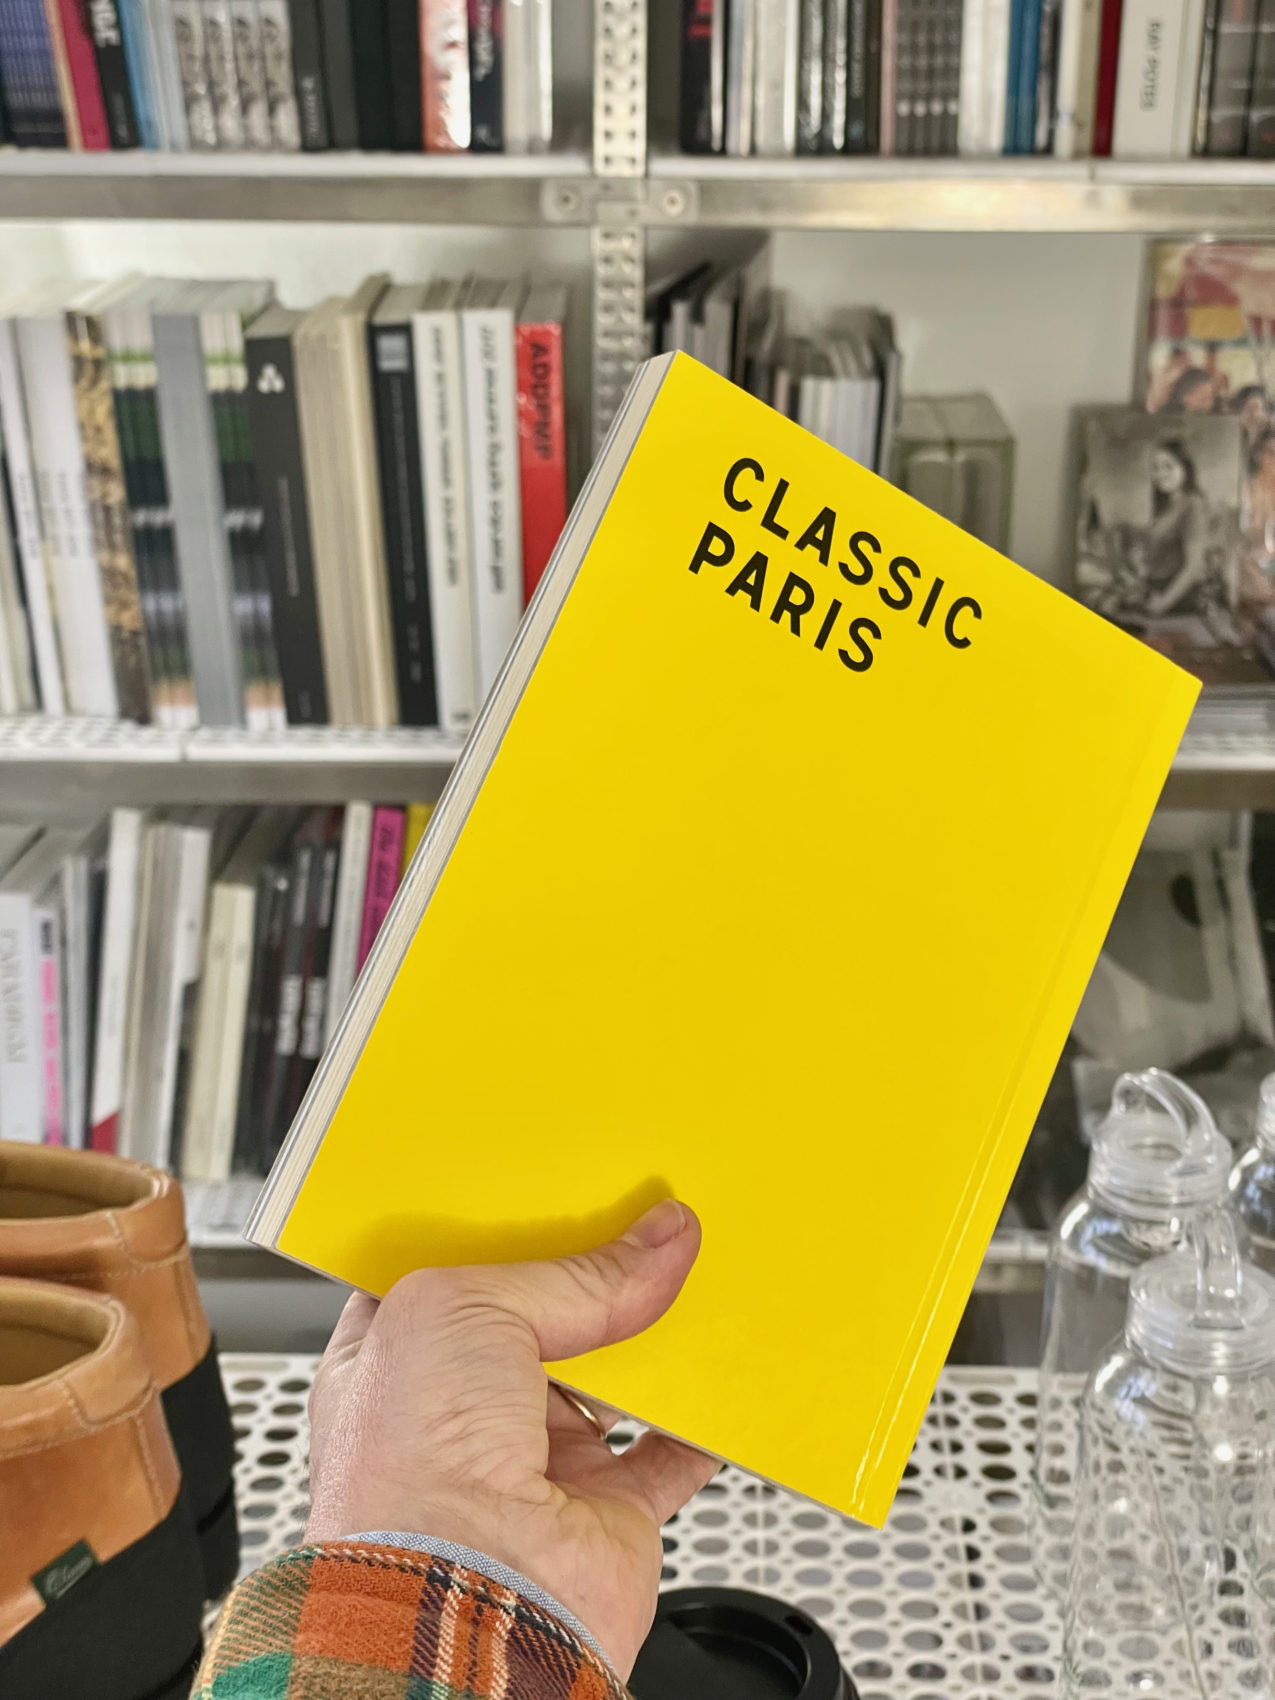 CLASSIC Paris - Paris Ass Book Fair